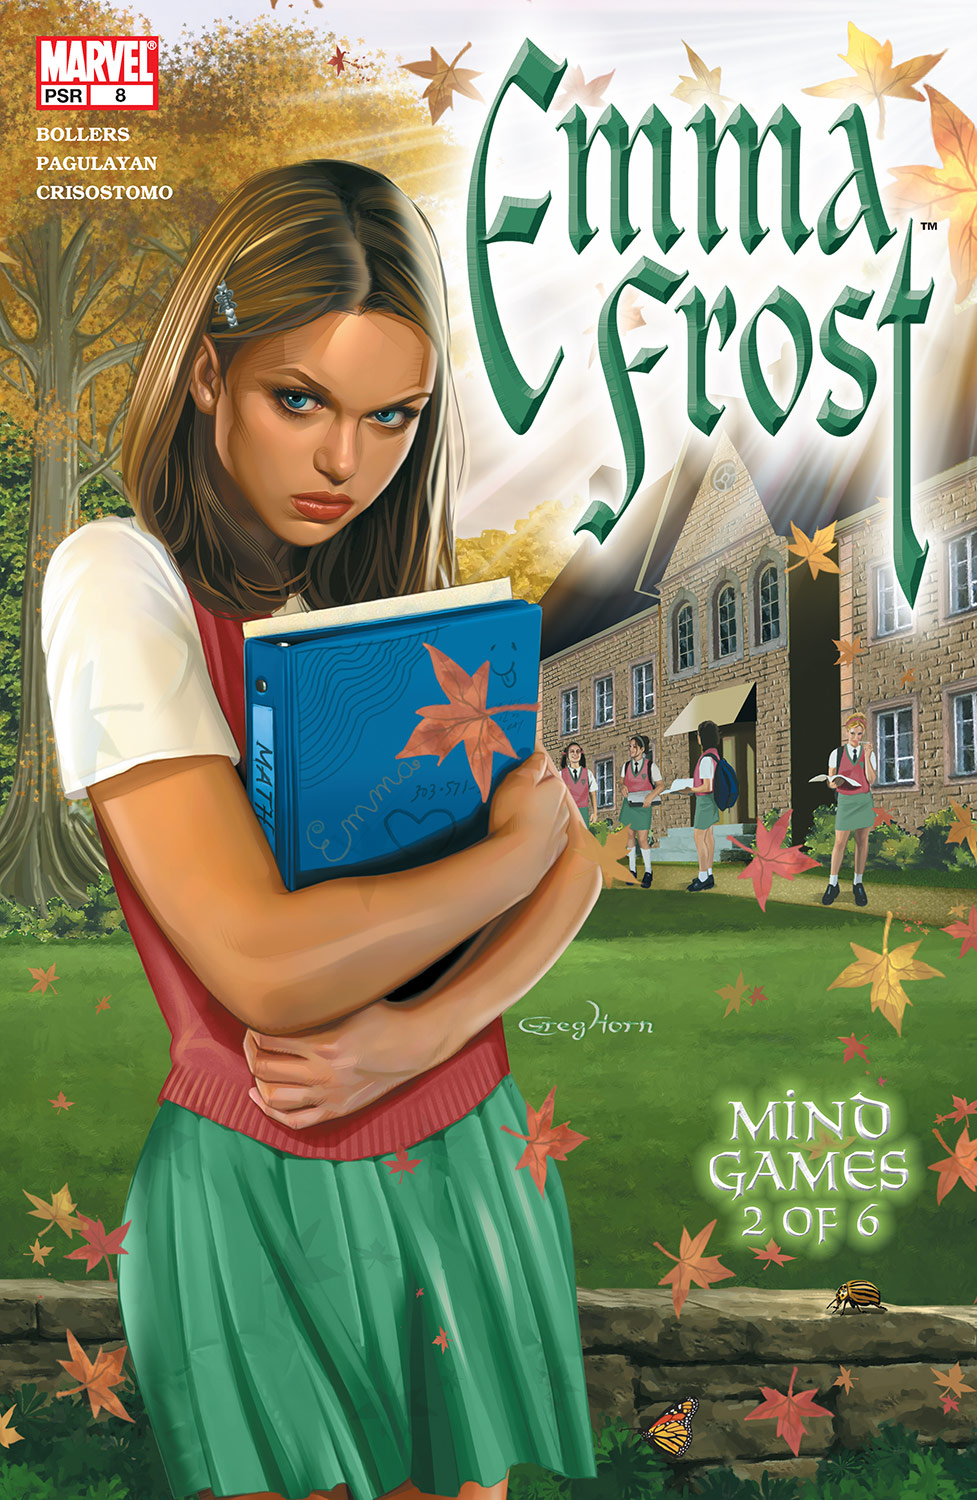 Emma Frost (2003) #8